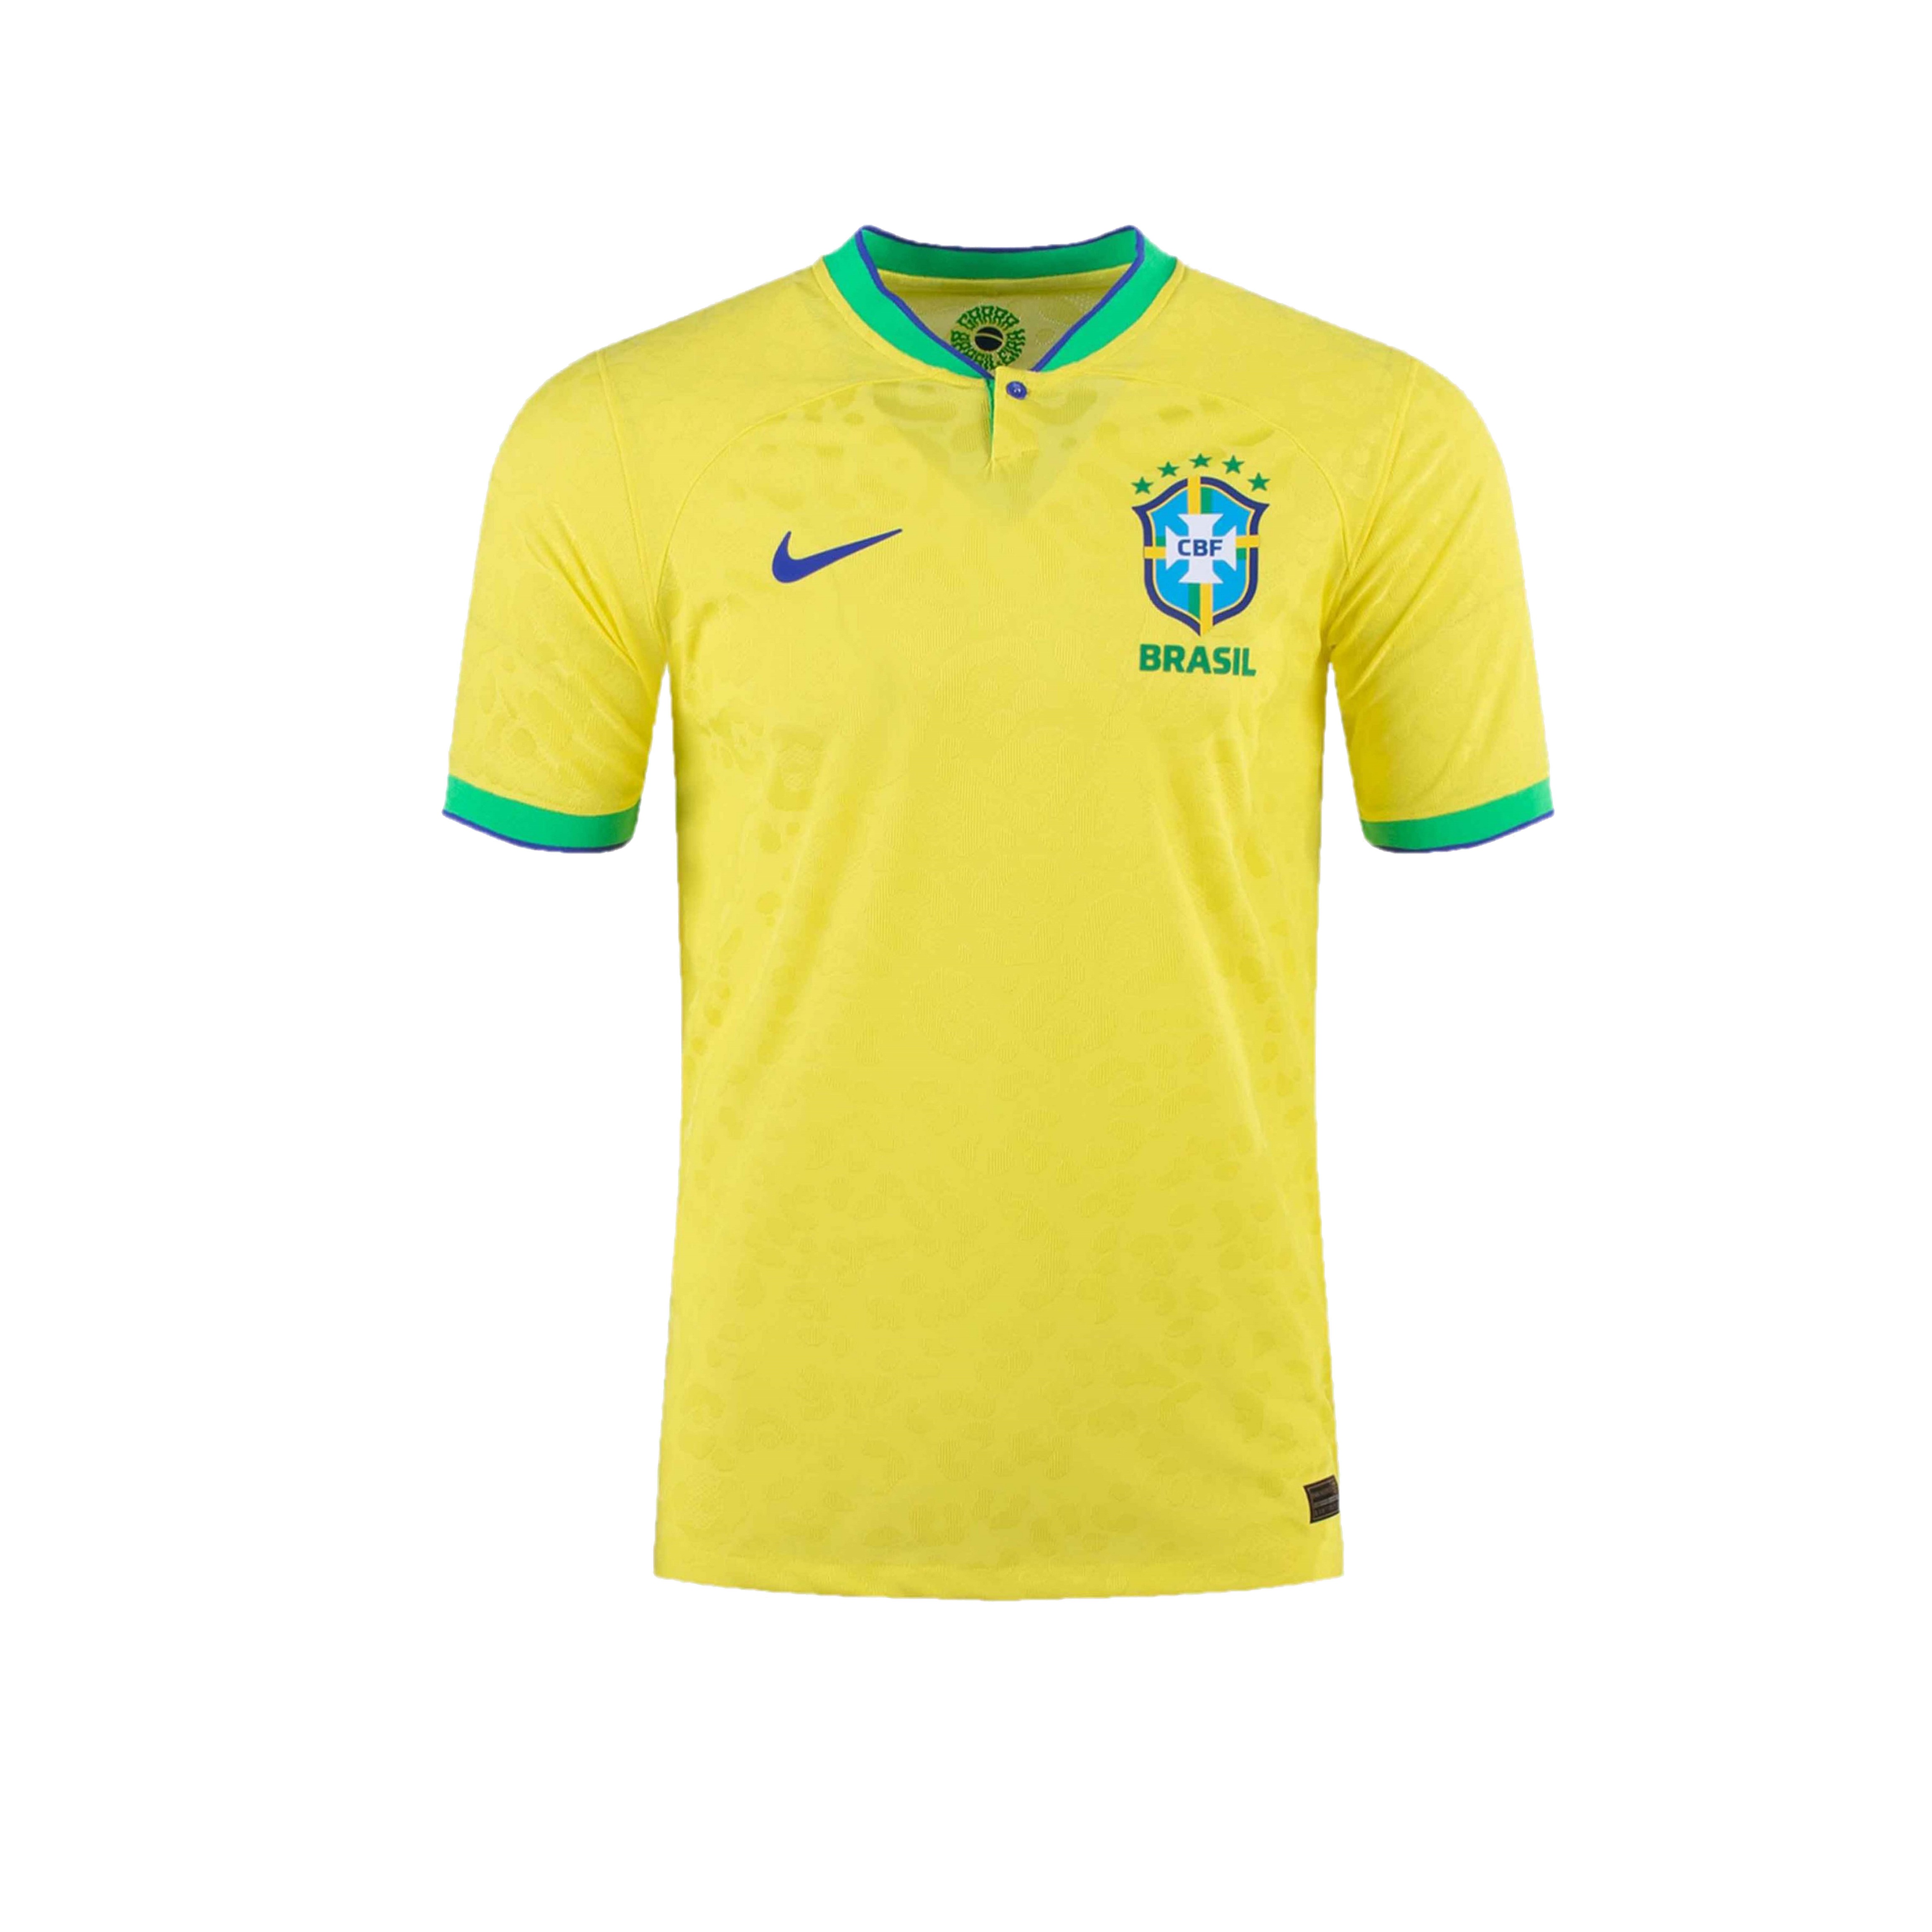 World Cup Jersey - Brazil Home Jersey